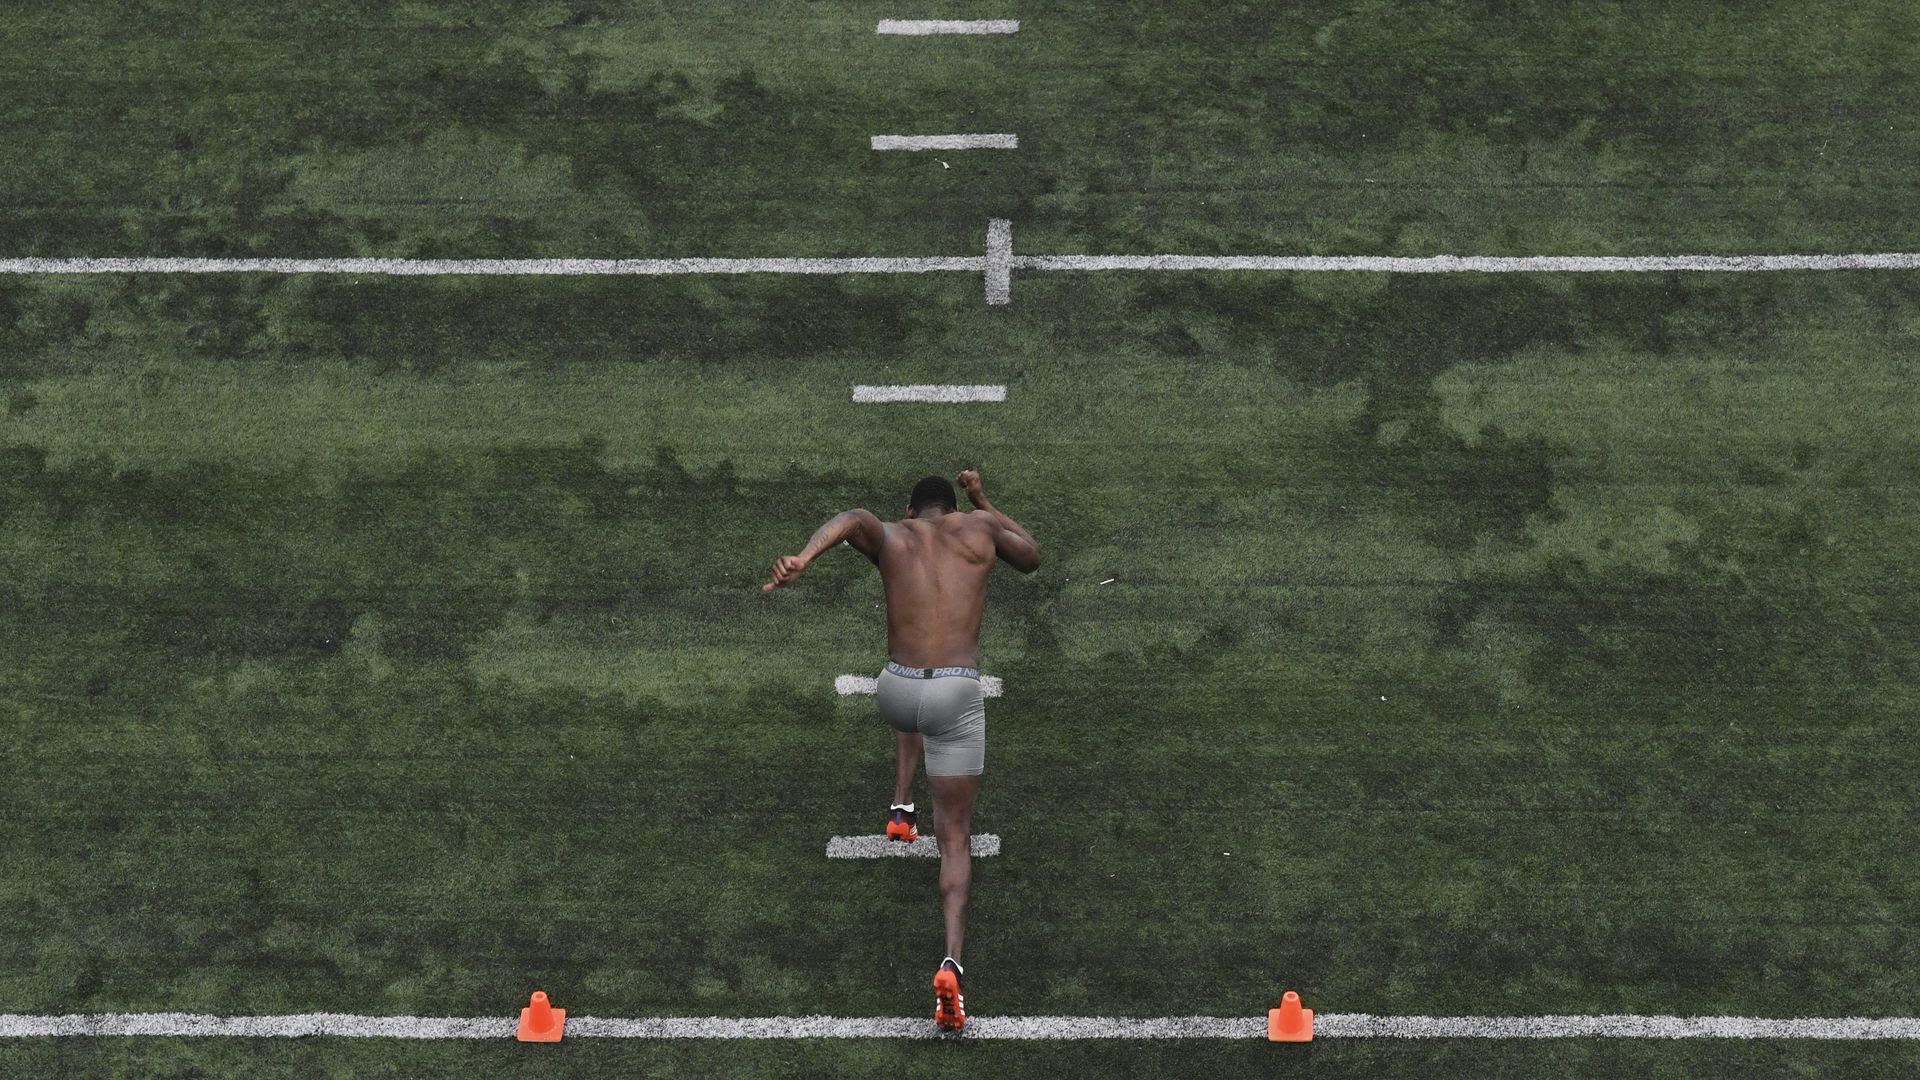 A player running on a football field